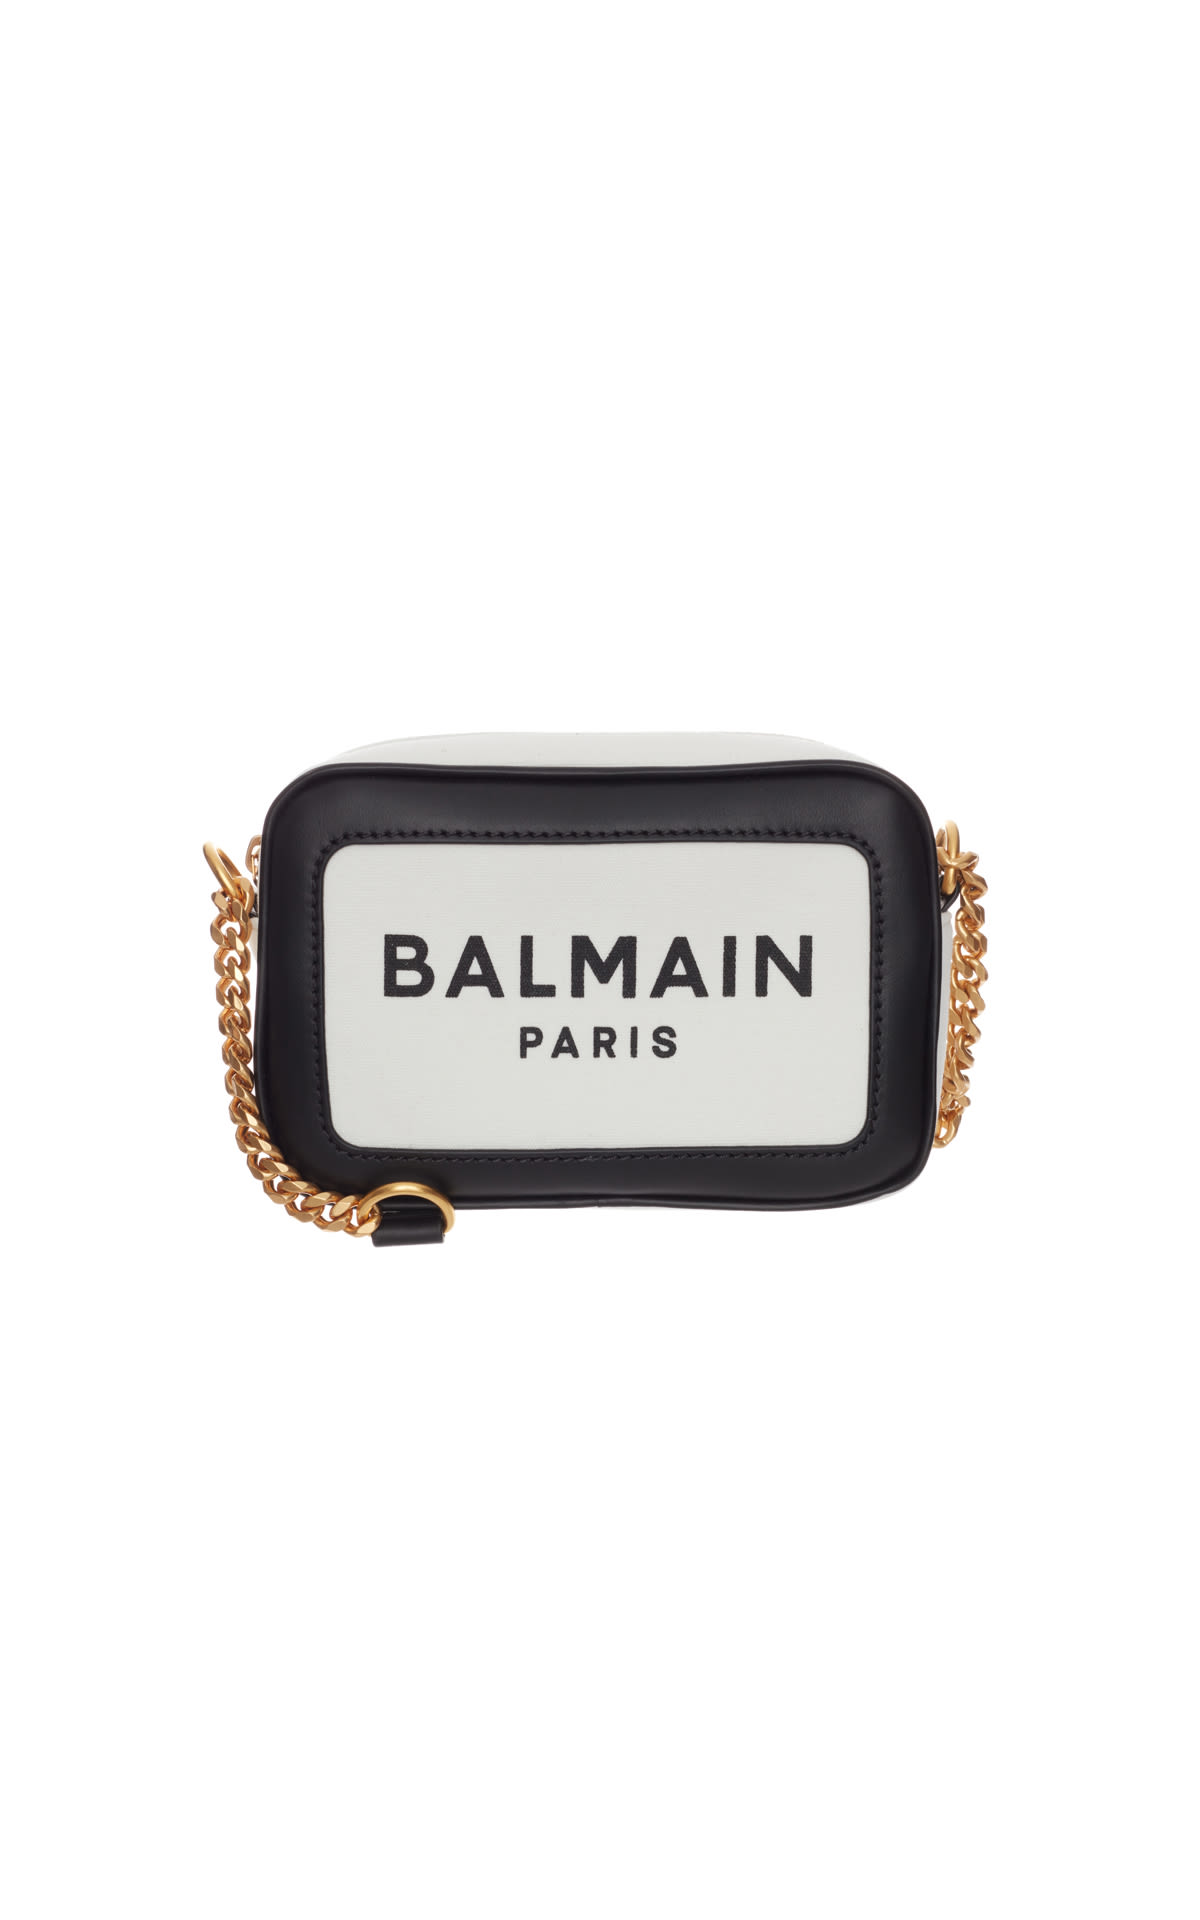 Balmain Signature camera bag from Bicester Village